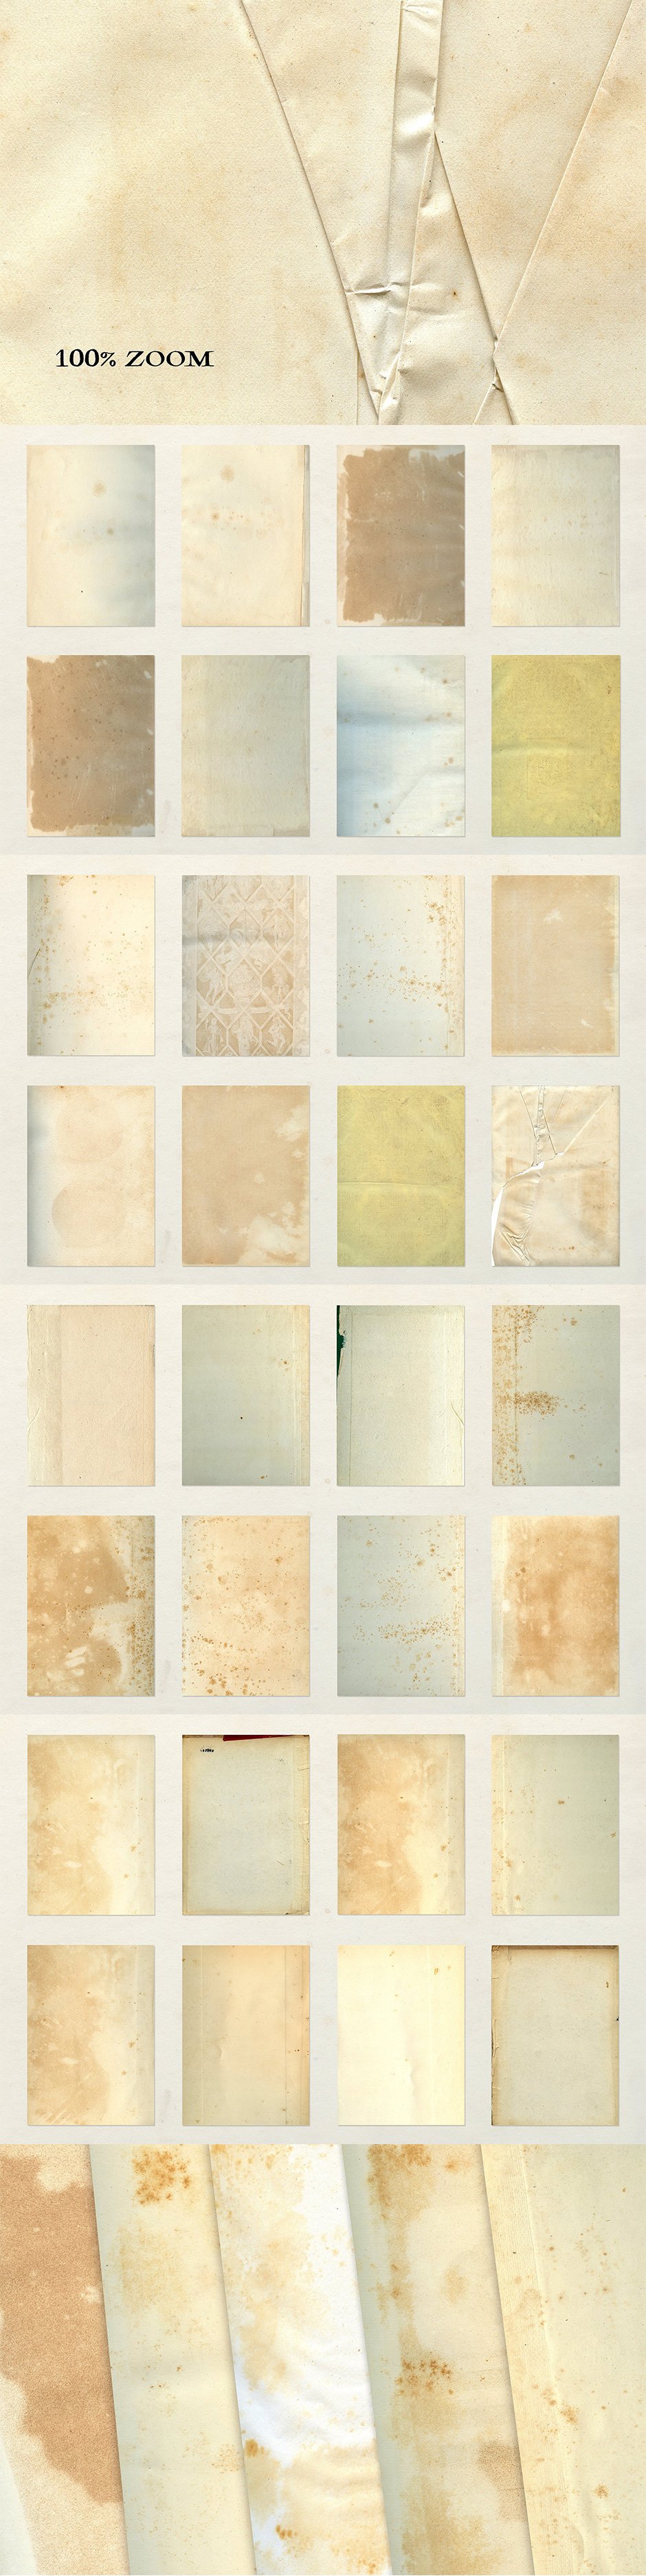 37 Vintage Paper Textures